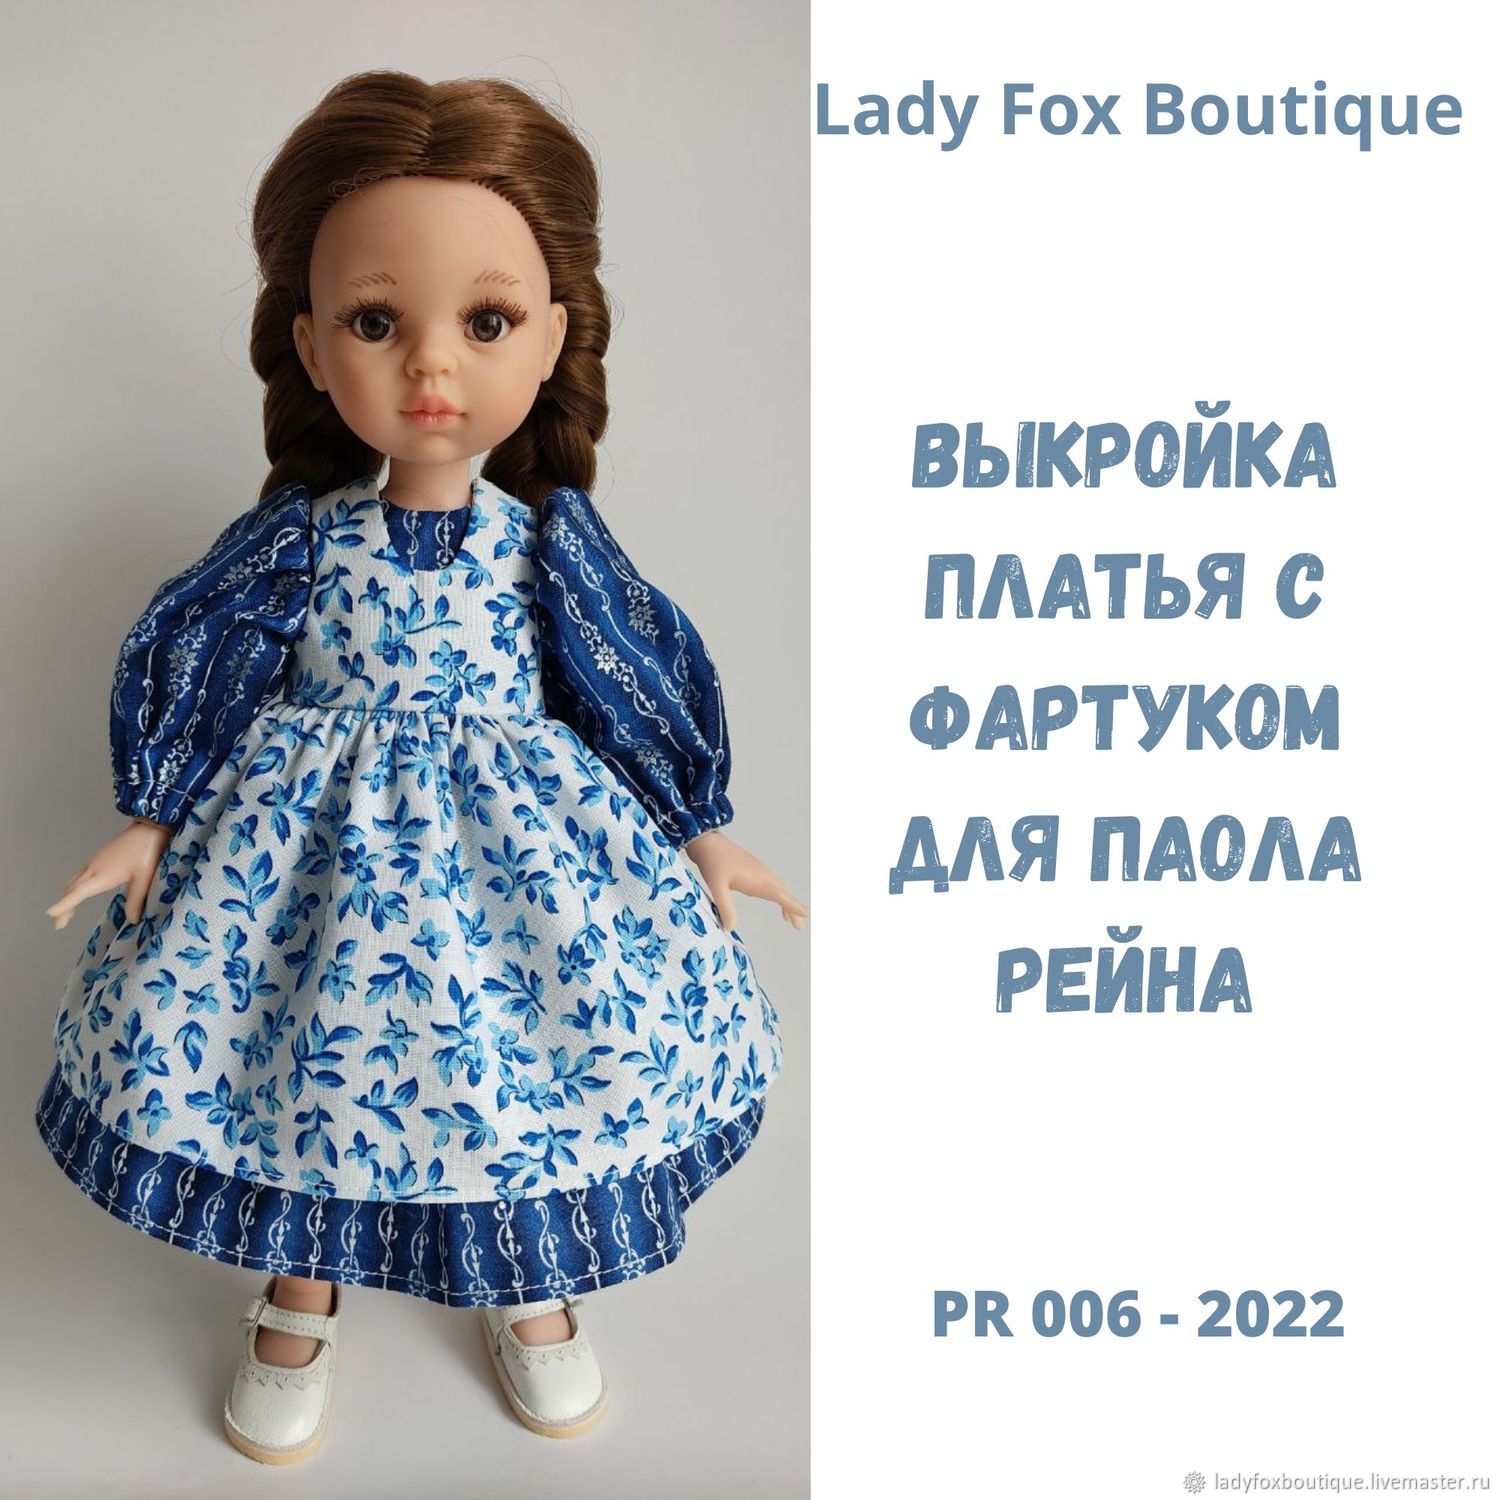 Форум о куклах DP